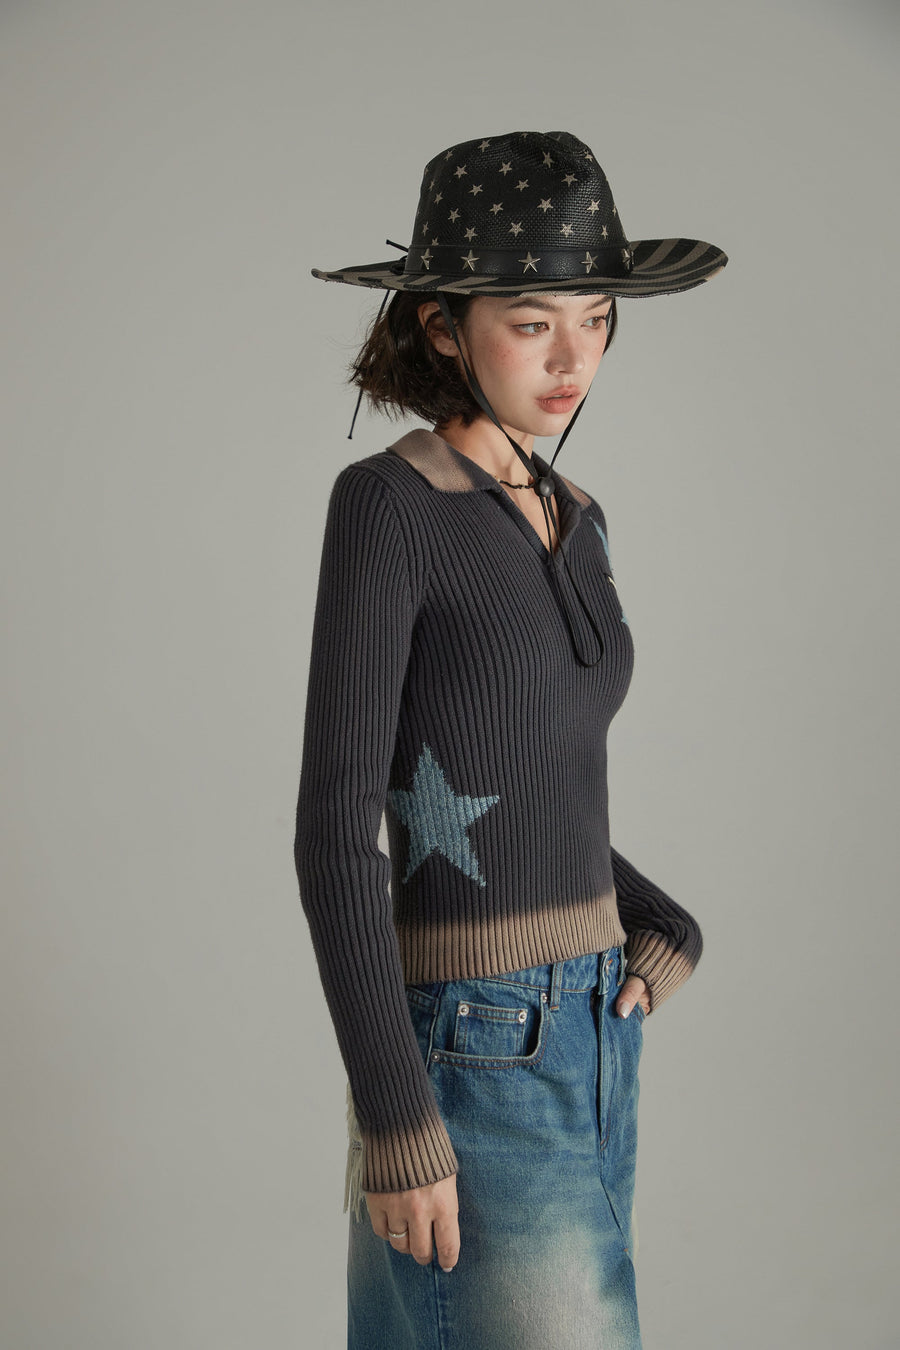 Vintage Star Knit Sweater